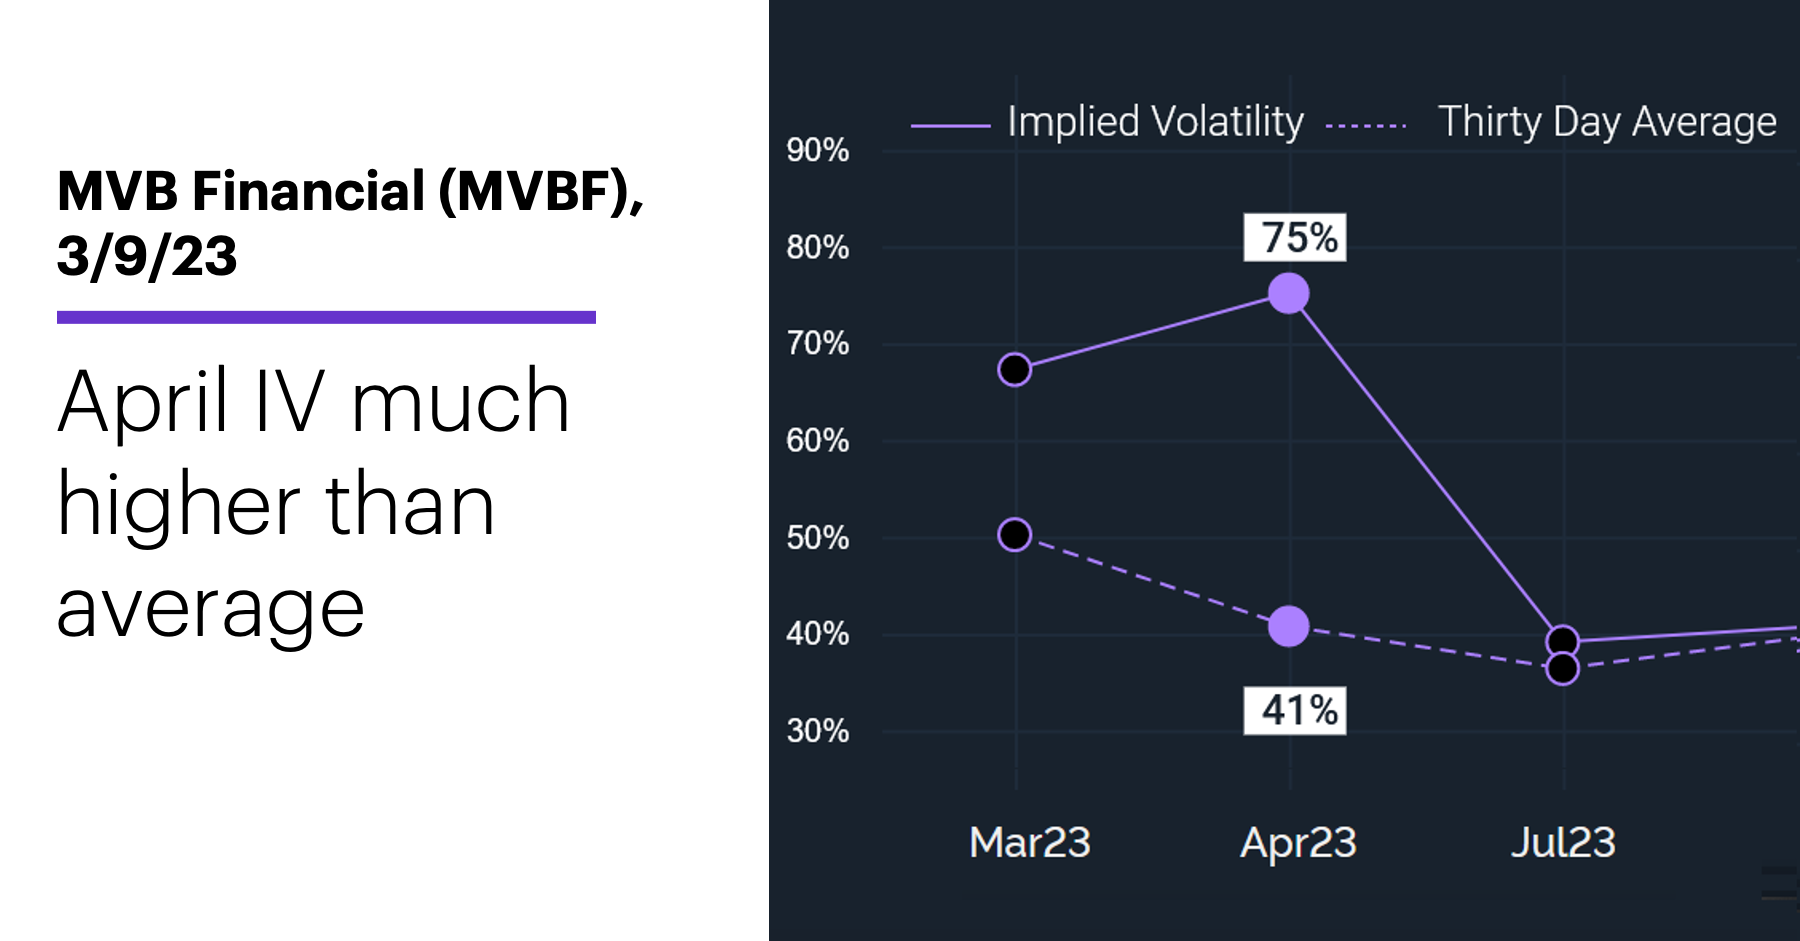 Chart 2: MVB Financial (MVBF), 3/9/23. April IV much higher than average.